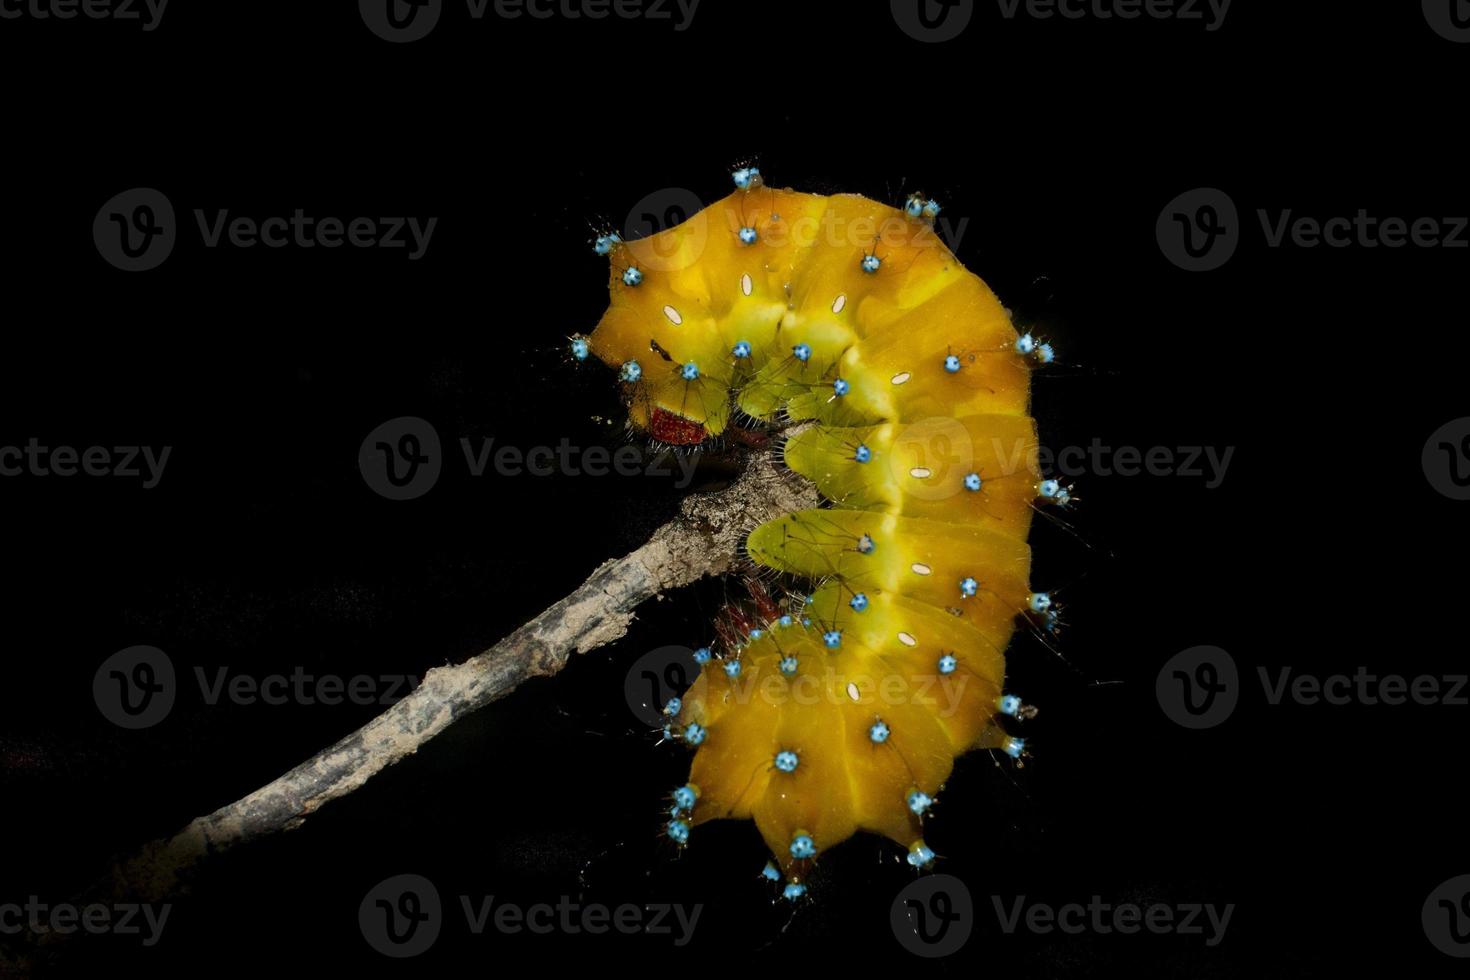 A yellow worm grub caterpillar photo